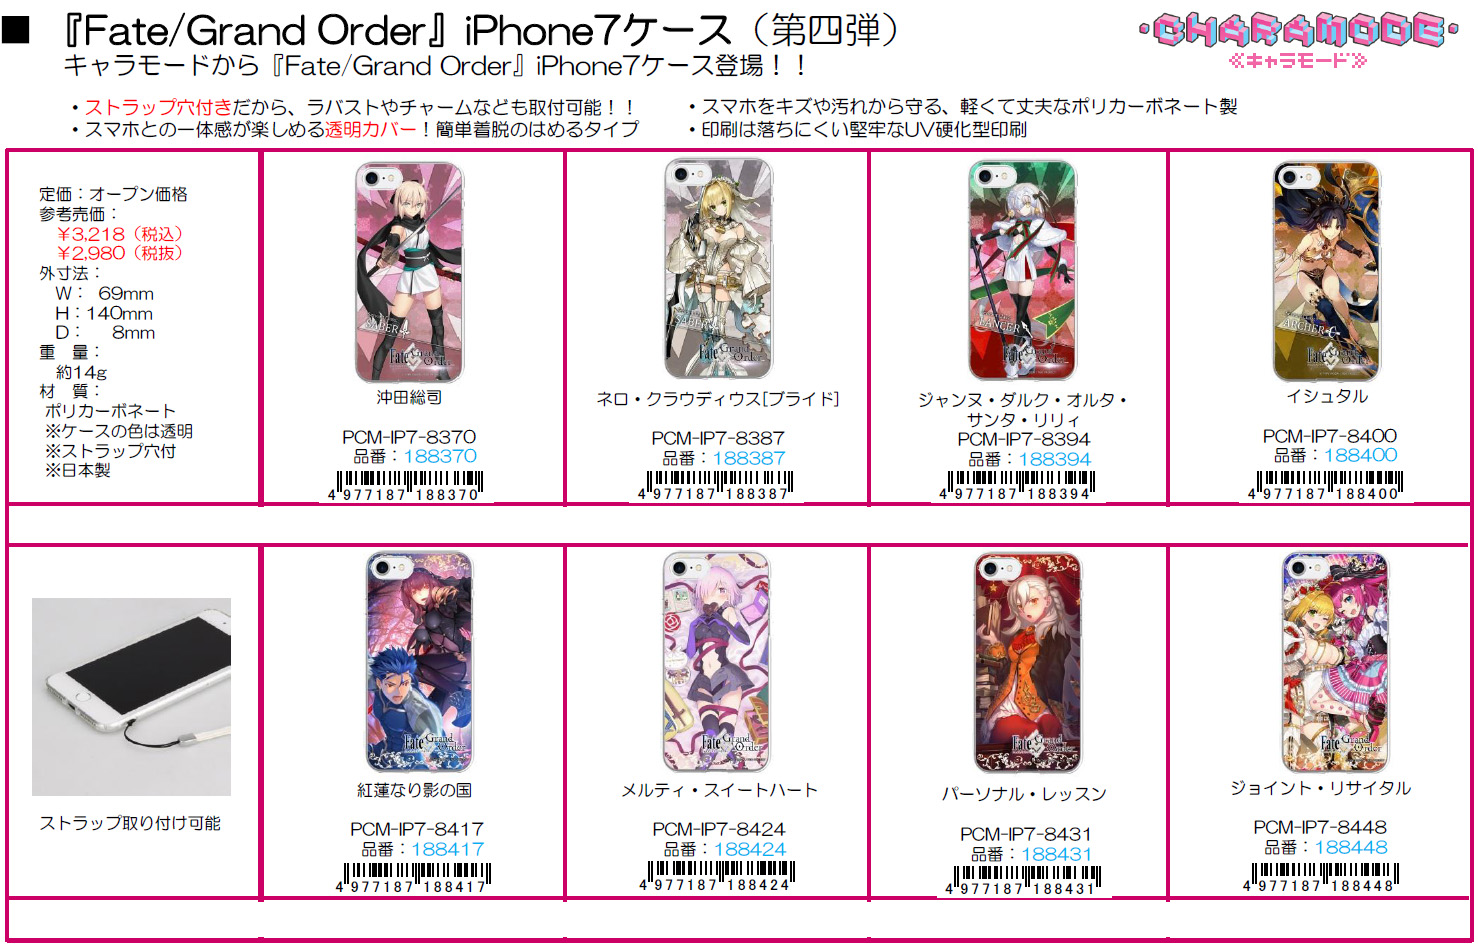 【B】Fate/Grand Order iPhone7手机壳 第4弹 